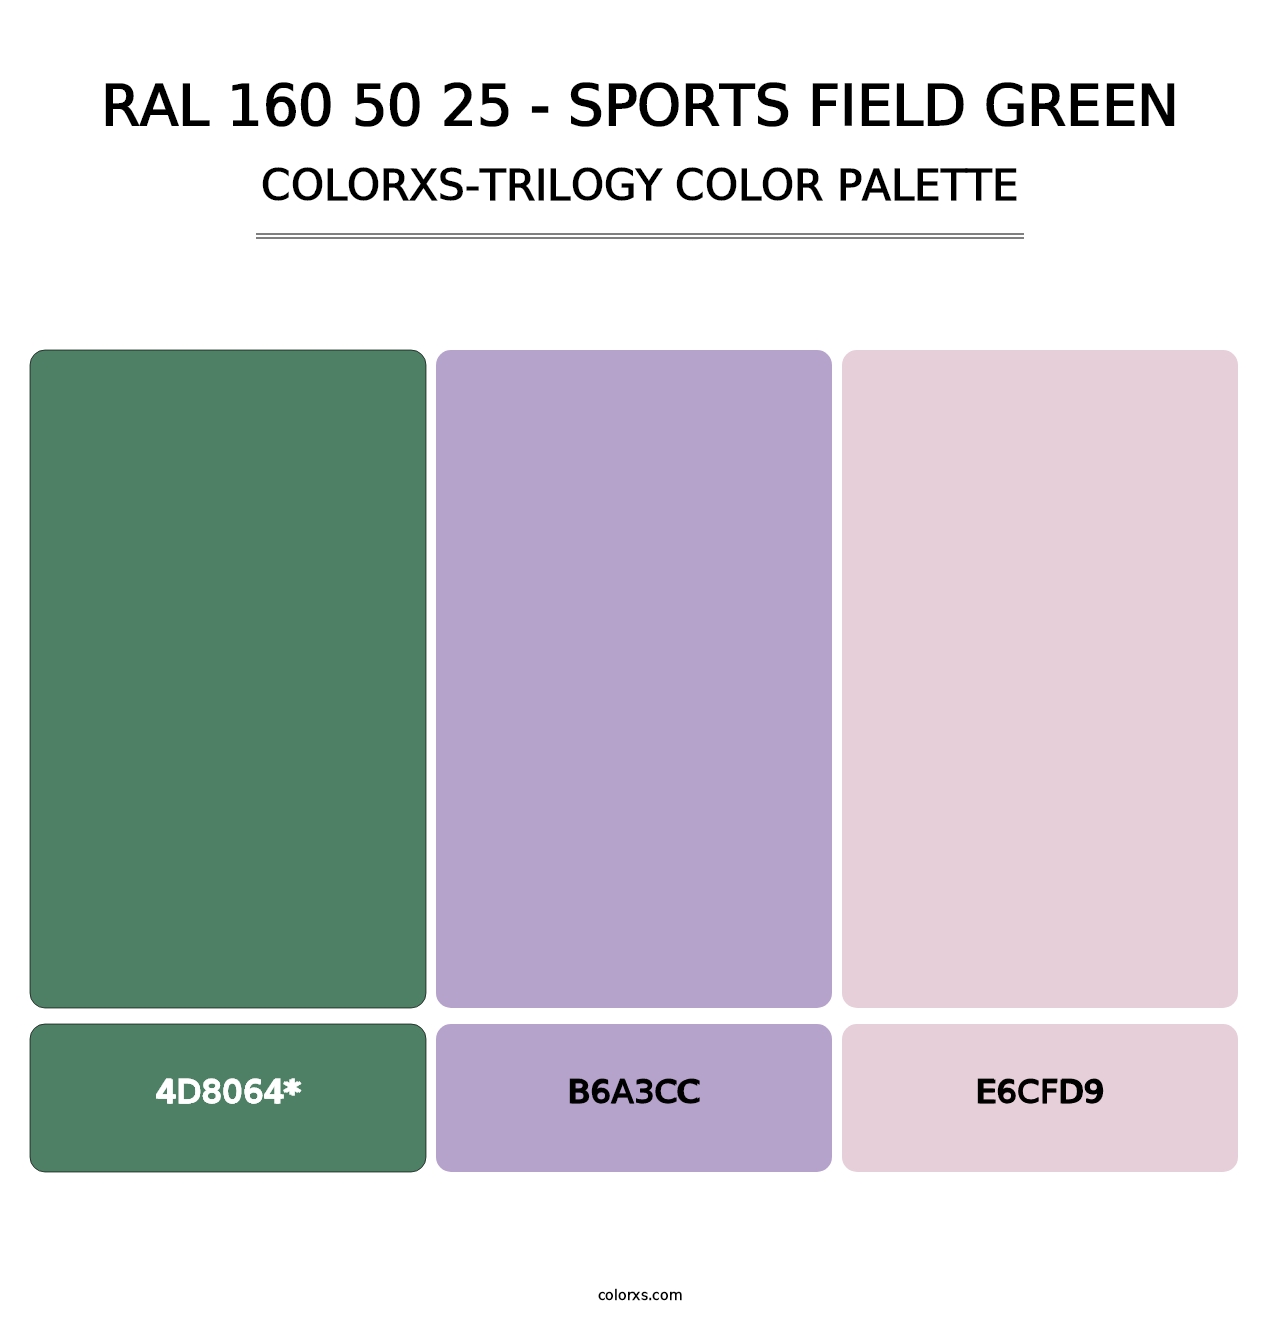 RAL 160 50 25 - Sports Field Green - Colorxs Trilogy Palette